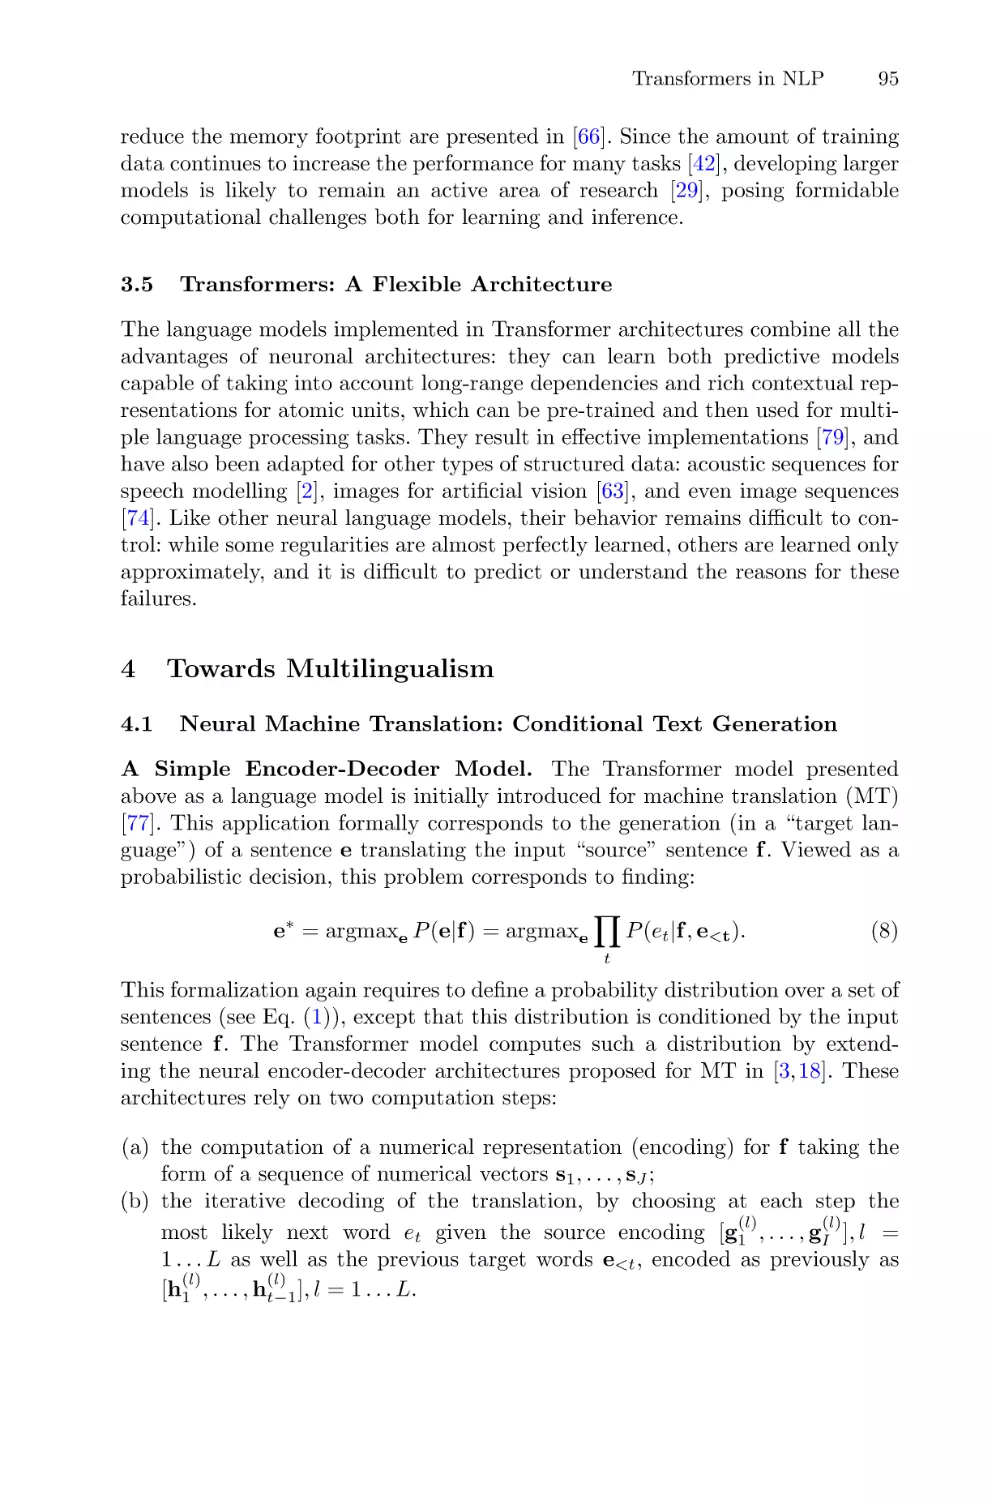 3.5 Transformers
4 Towards Multilingualism
4.1 Neural Machine Translation